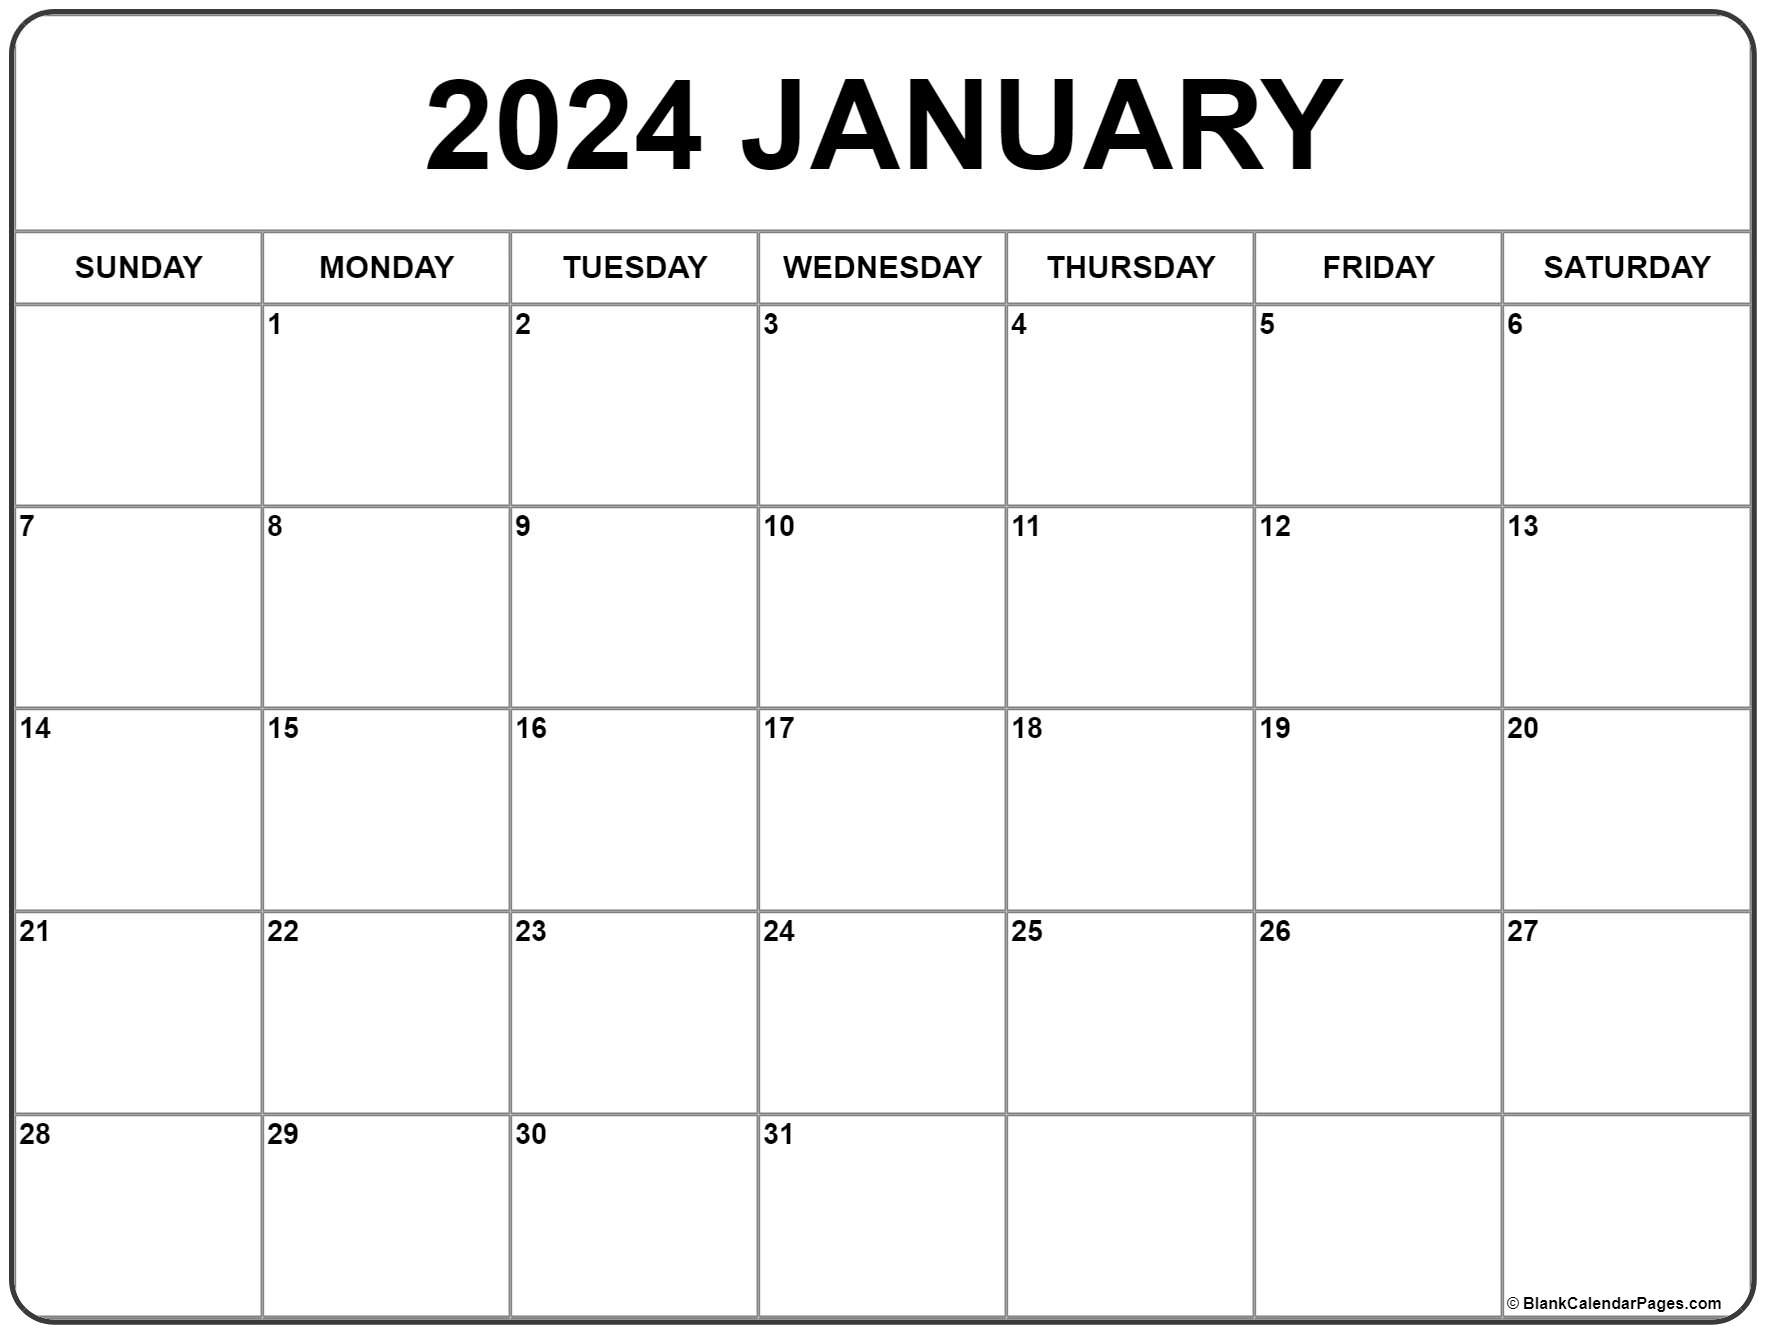 January 2024 Calendar | Free Printable Calendar for 2024-2024 Monthly Calendar Printable